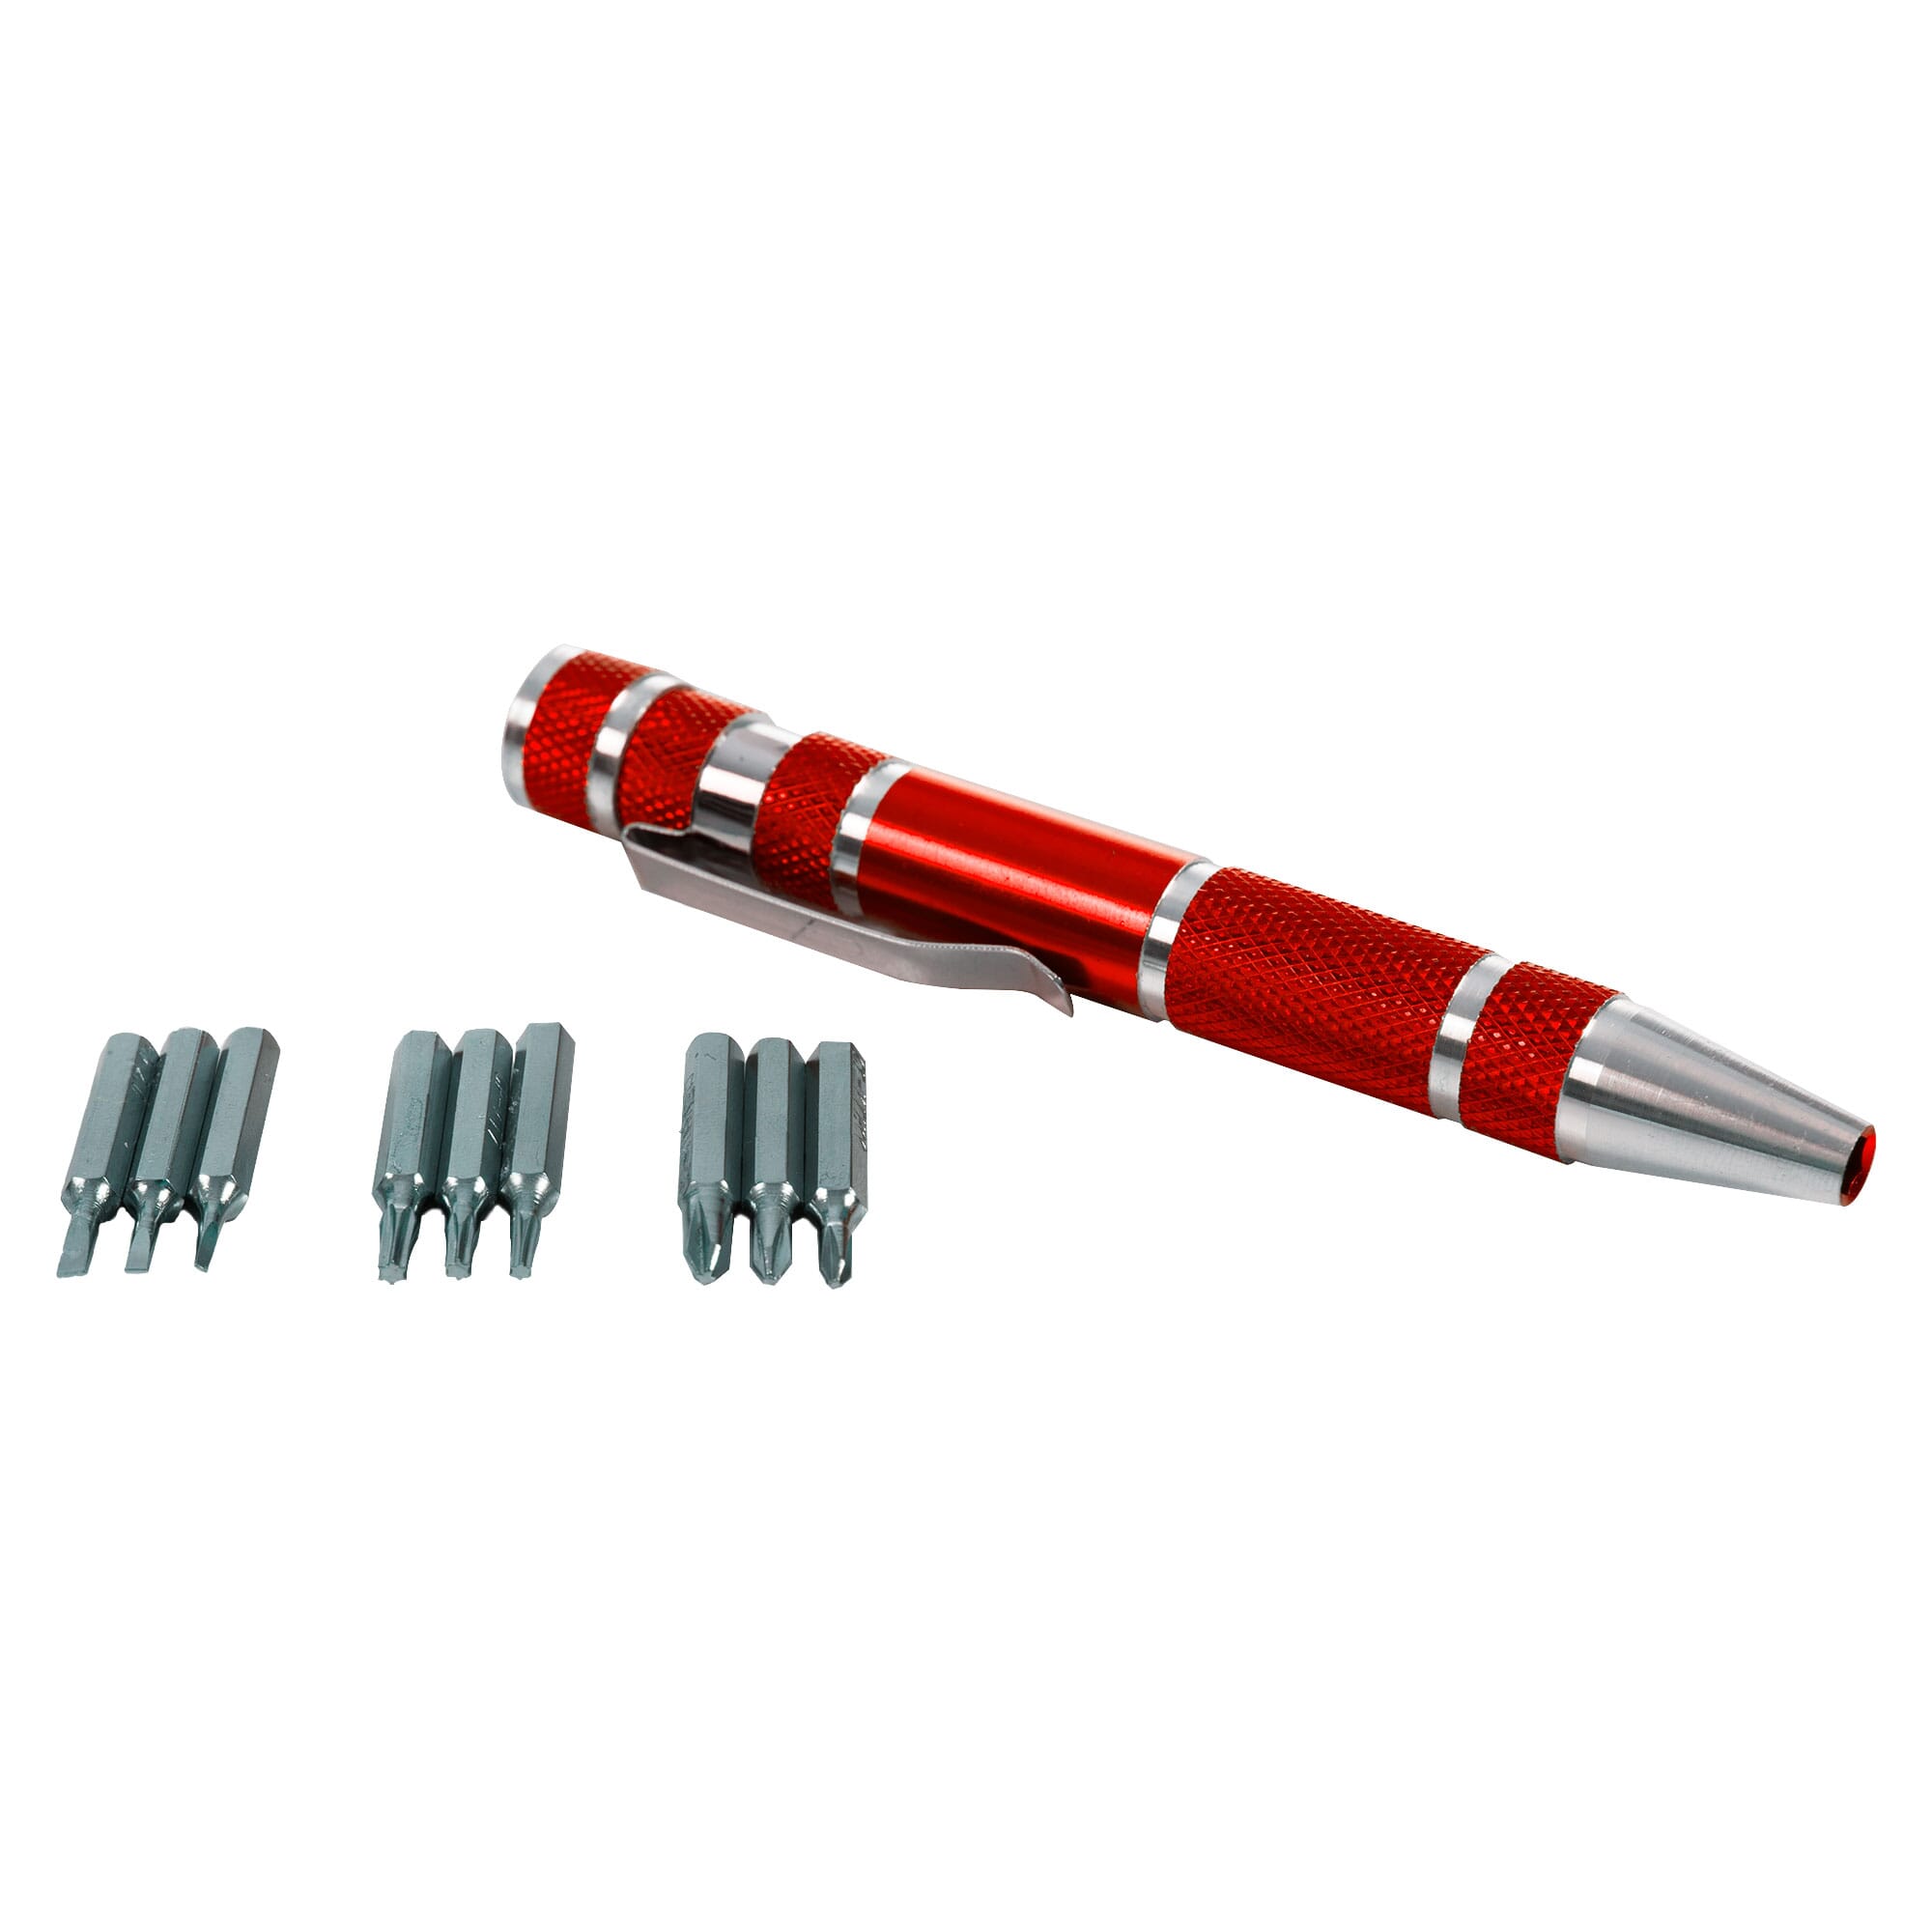 Stalwart Aluminum 9-in-1 Precision Pen Screwdriver Set - Free Shipping